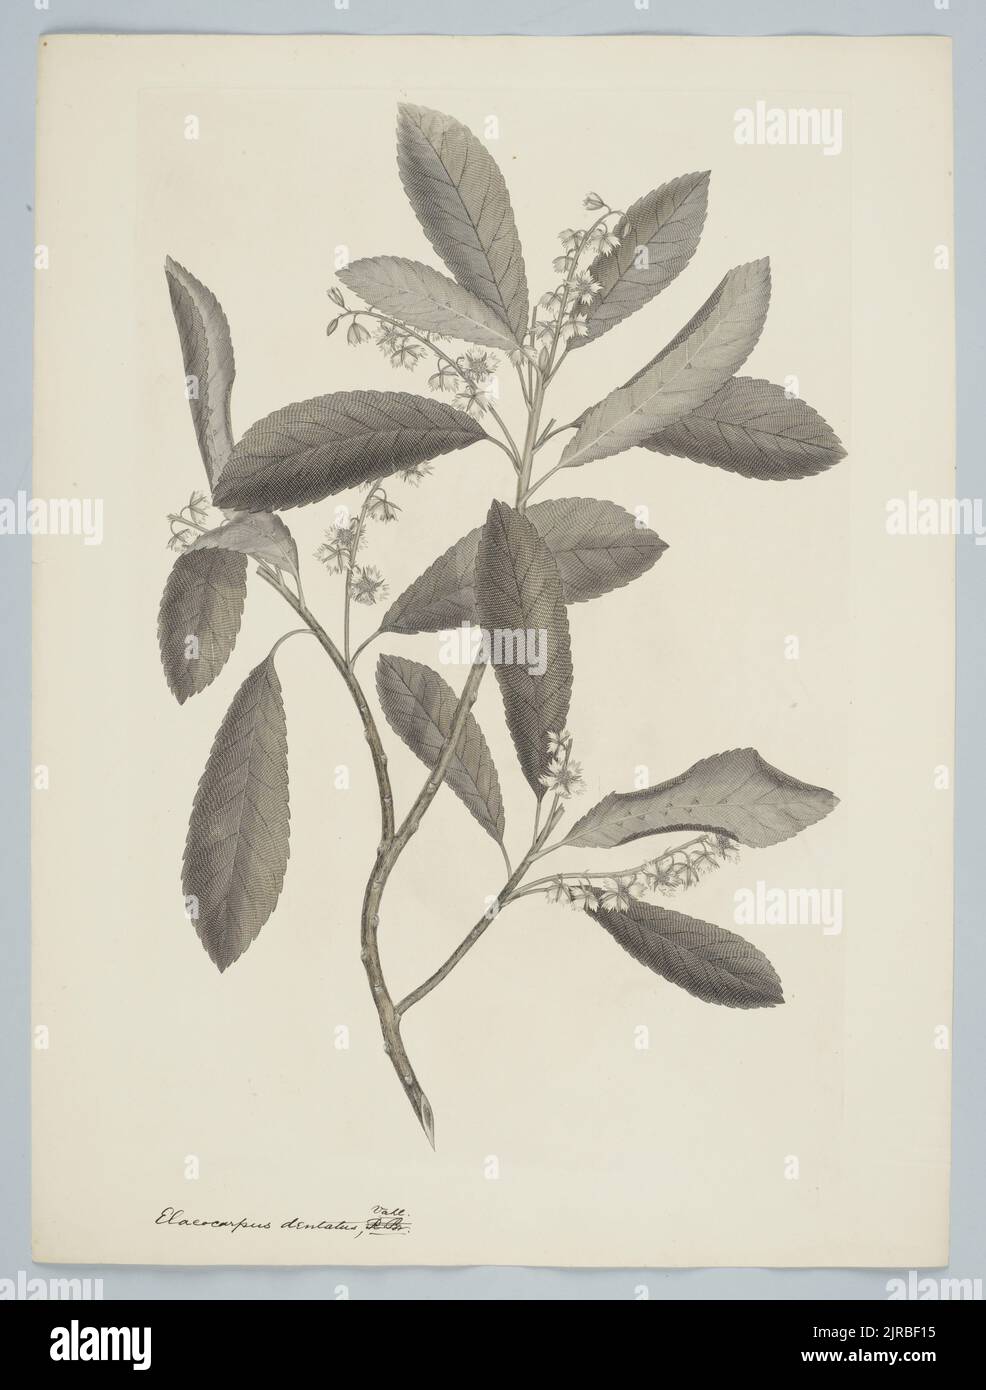 Elaeocarpus dentatus (Forster & G. Forster) Vahl, 1895, United Kingdom, by Sydney Parkinson. Gift of the British Museum, 1895. Stock Photo